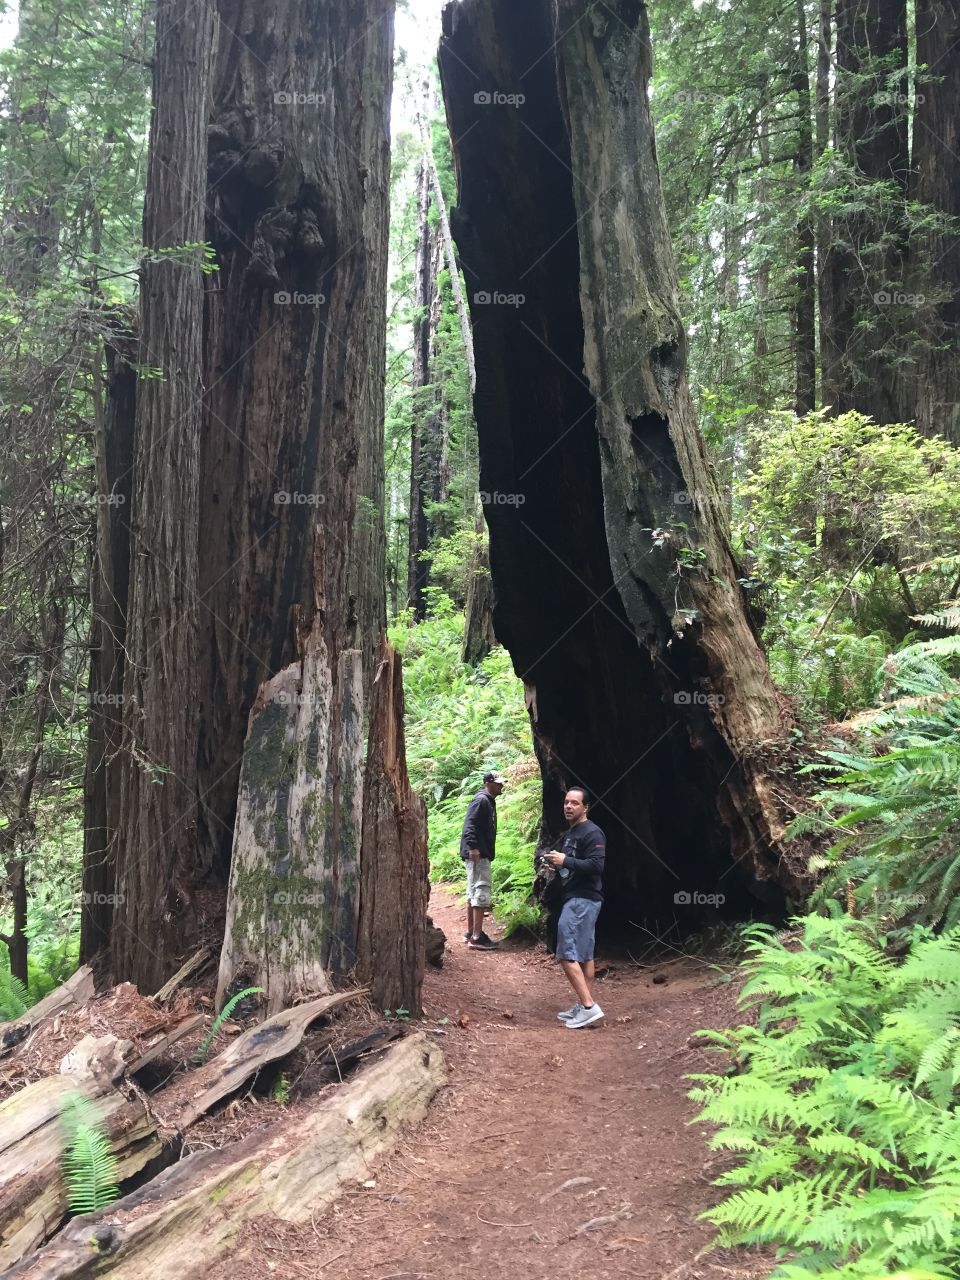 Redwood forest 